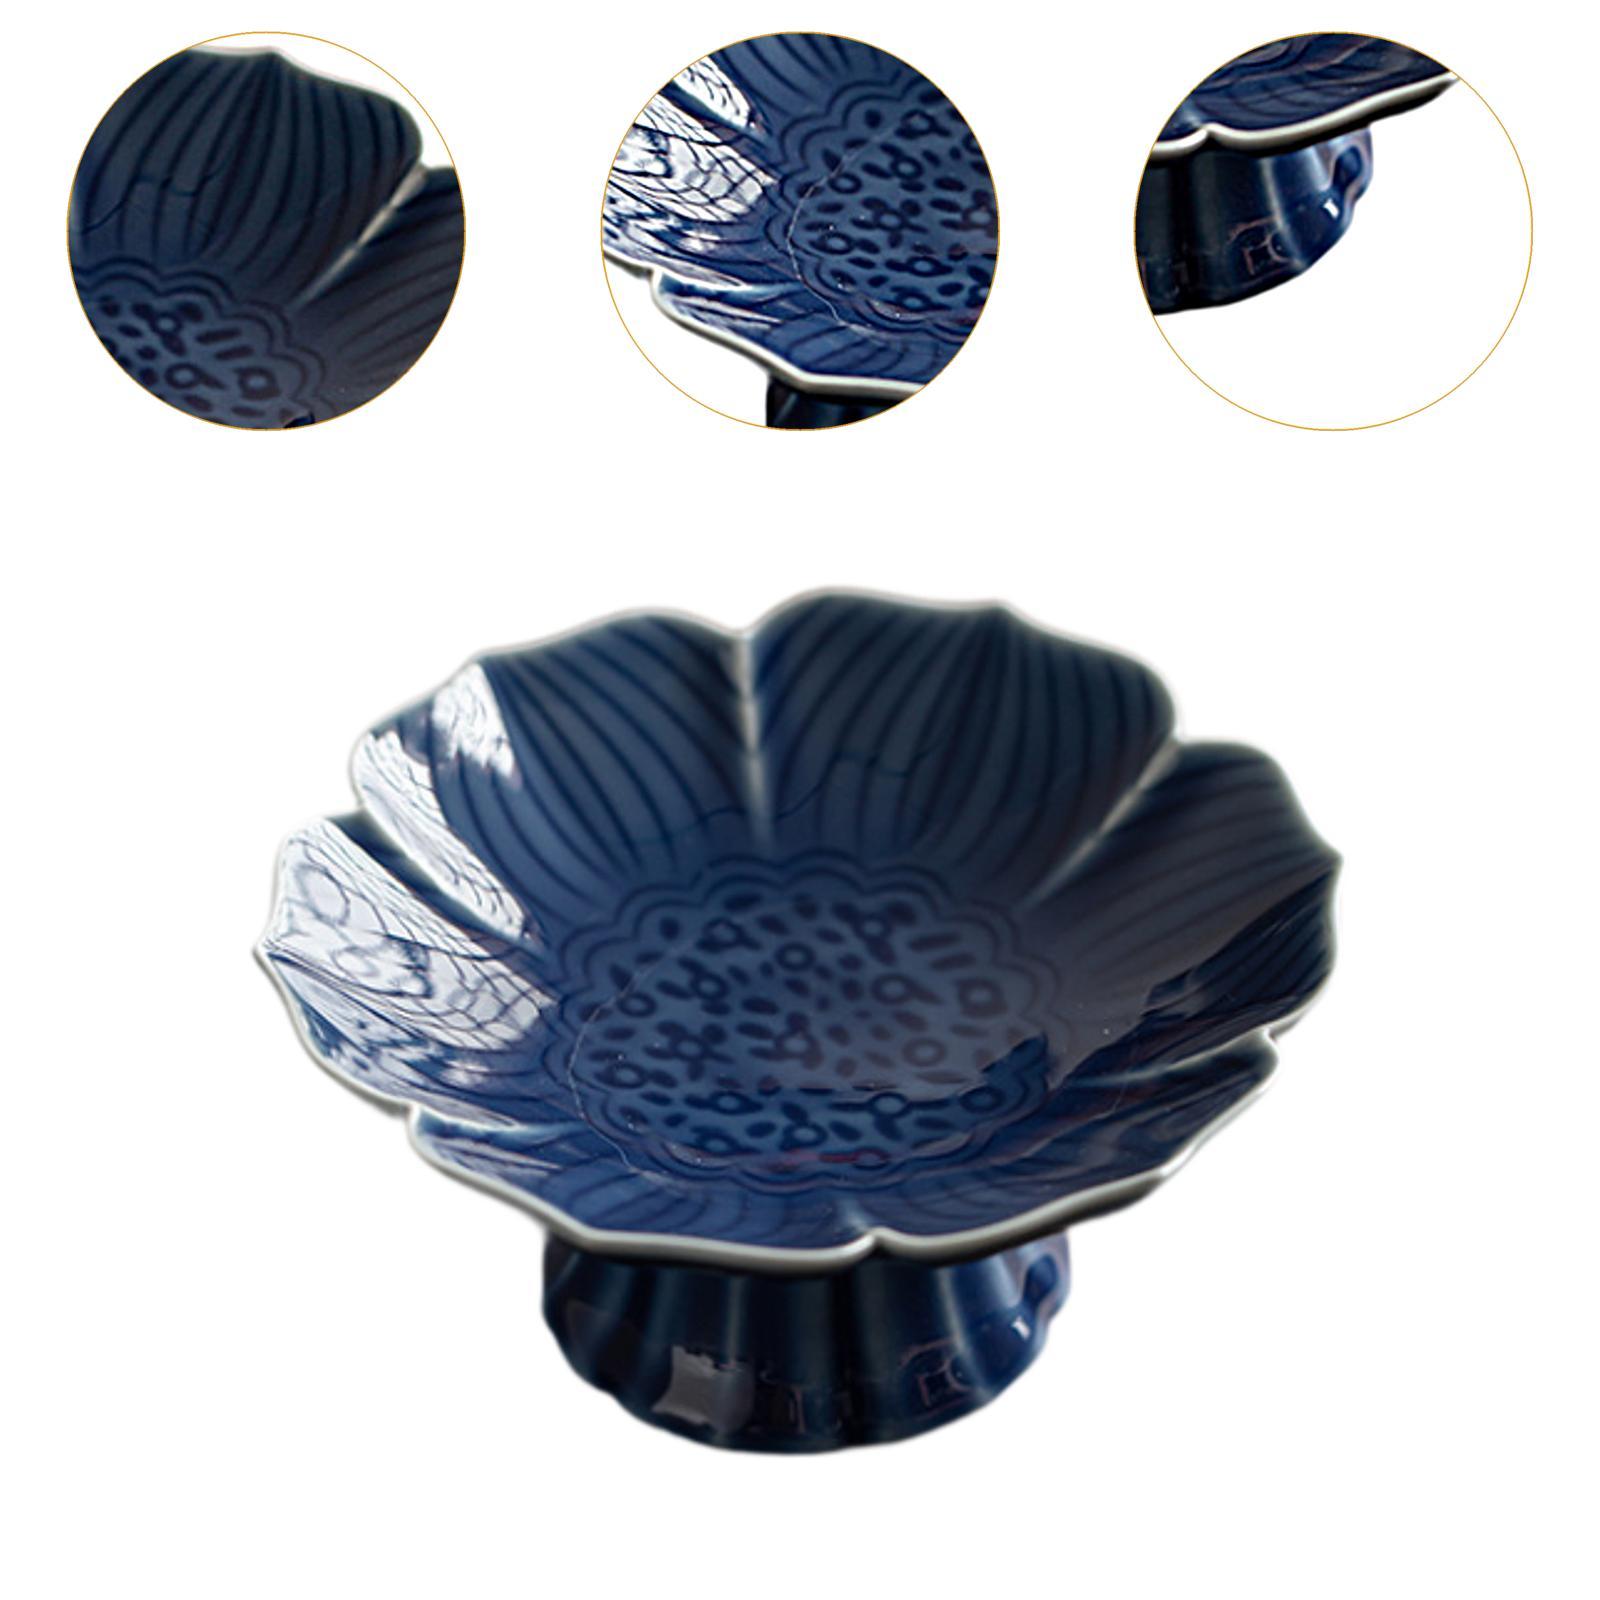 Porcelain Footed Fruit Bowl Holder Decorative for Kitchen Farmhouse Home Decor blue